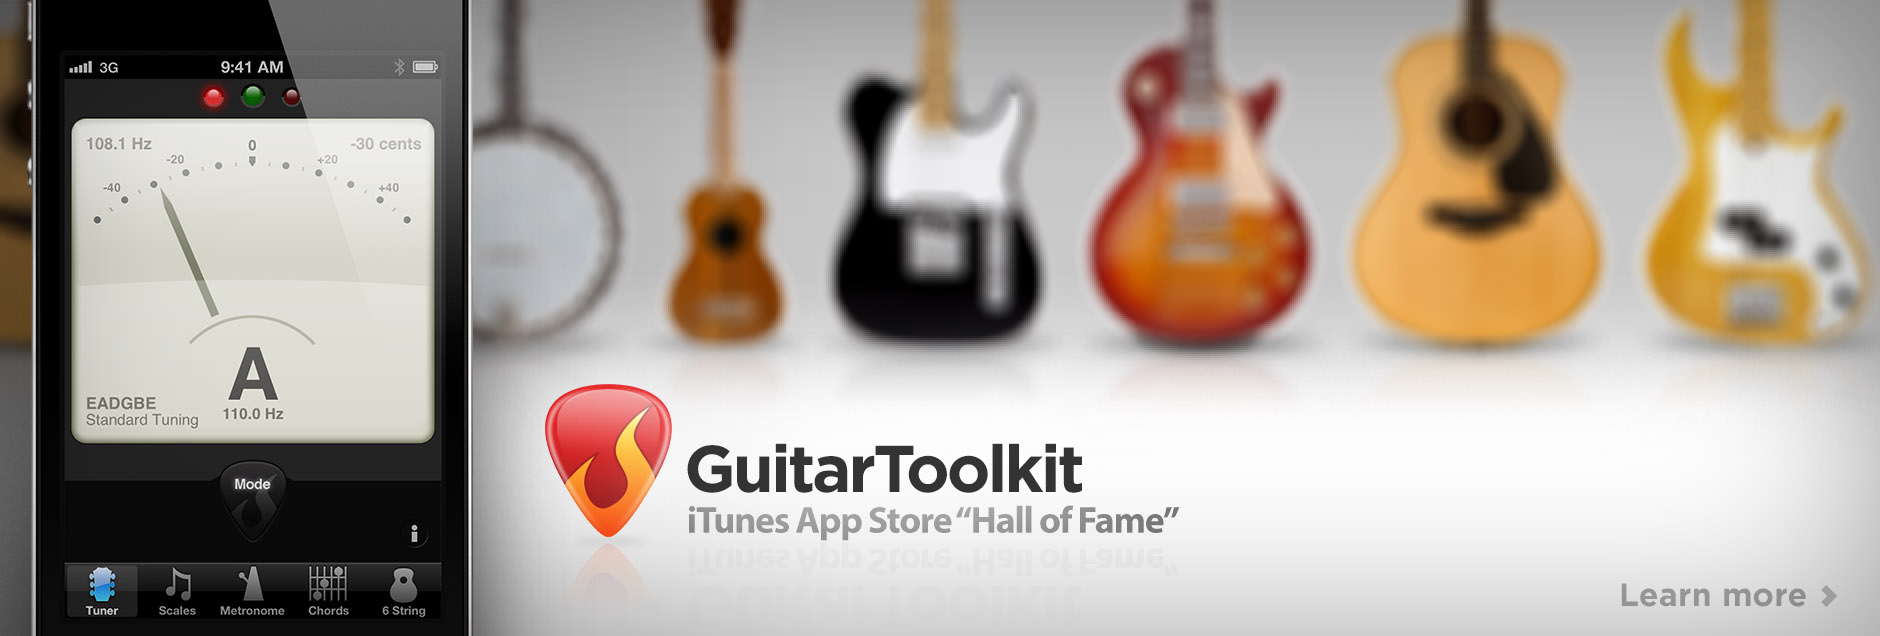 GuitarToolkit - Lighten your gig bag